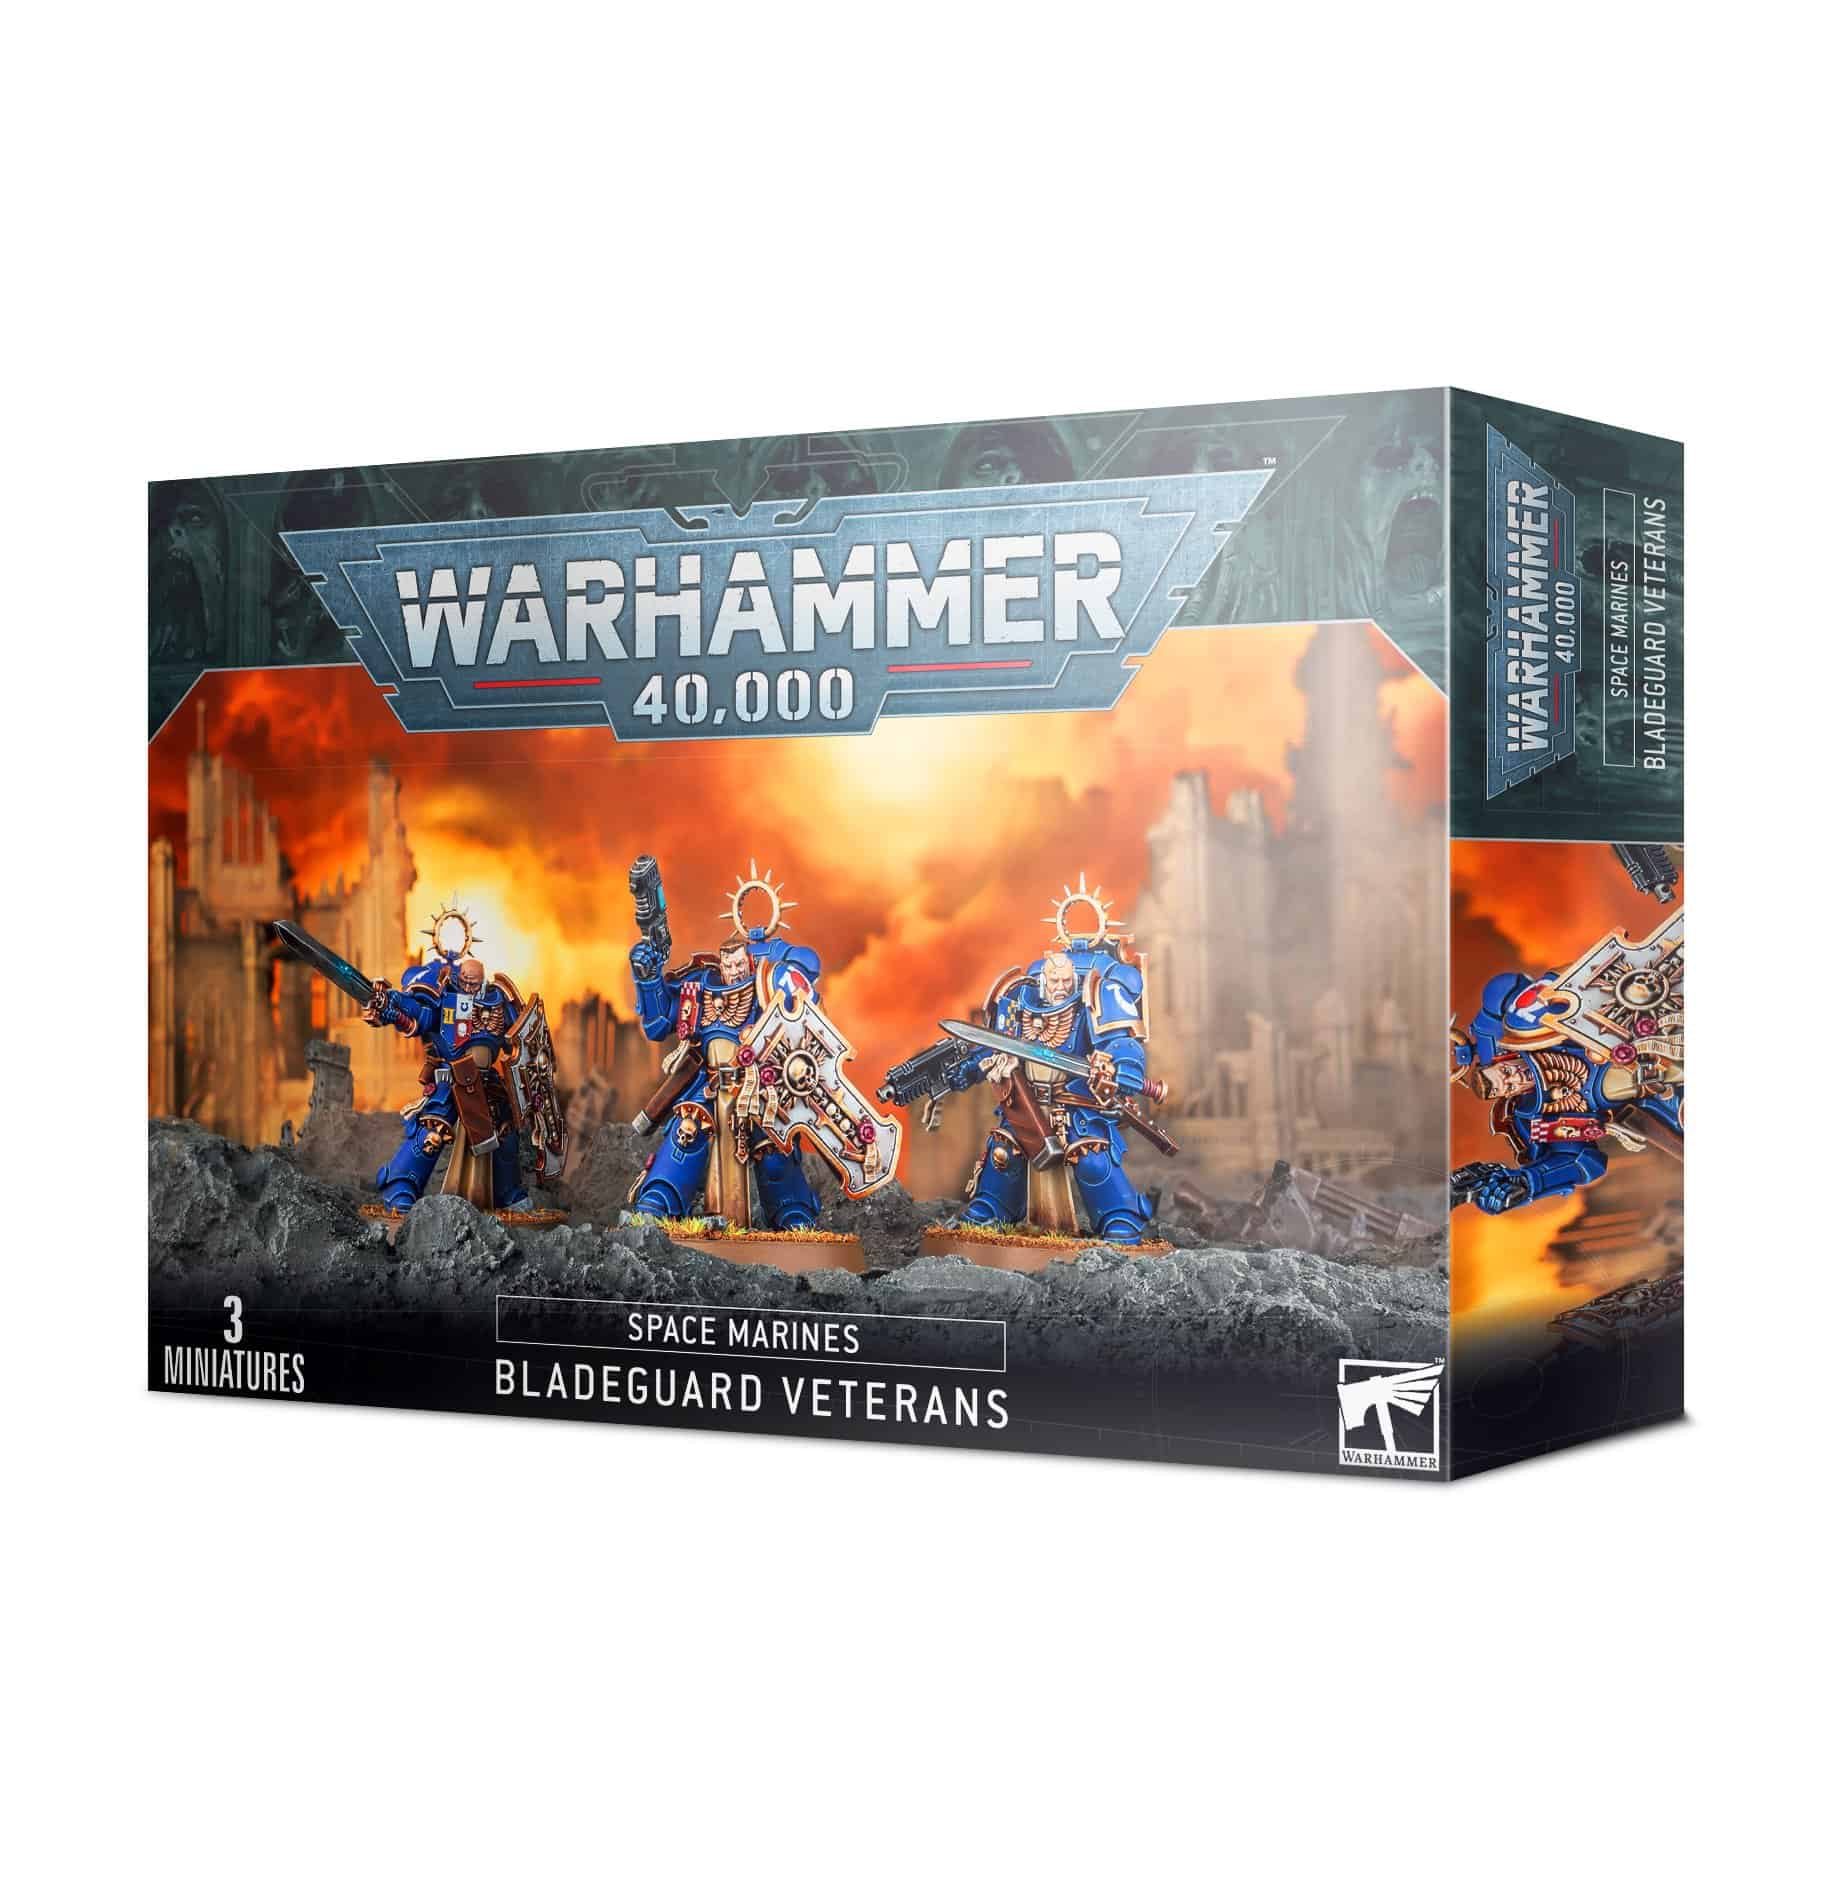 Bladeguard Veterans - Buy Discount Warhammer now at Rogue Games!